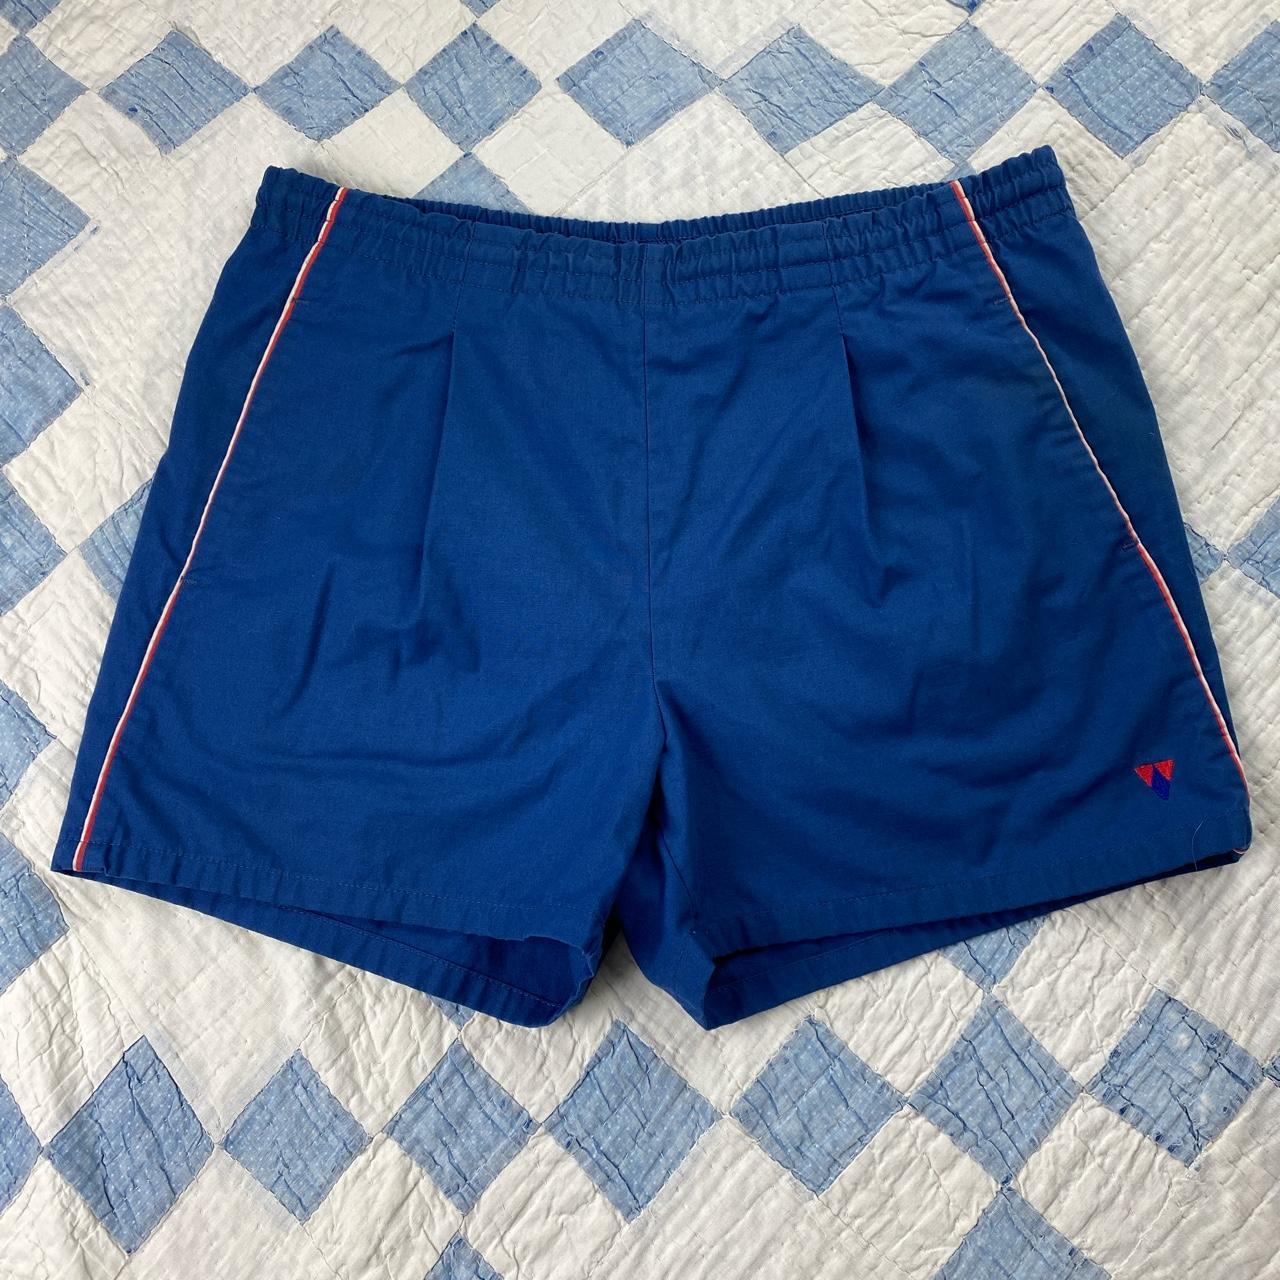 Jantzen Men's Navy and Red Swim-briefs-shorts | Depop